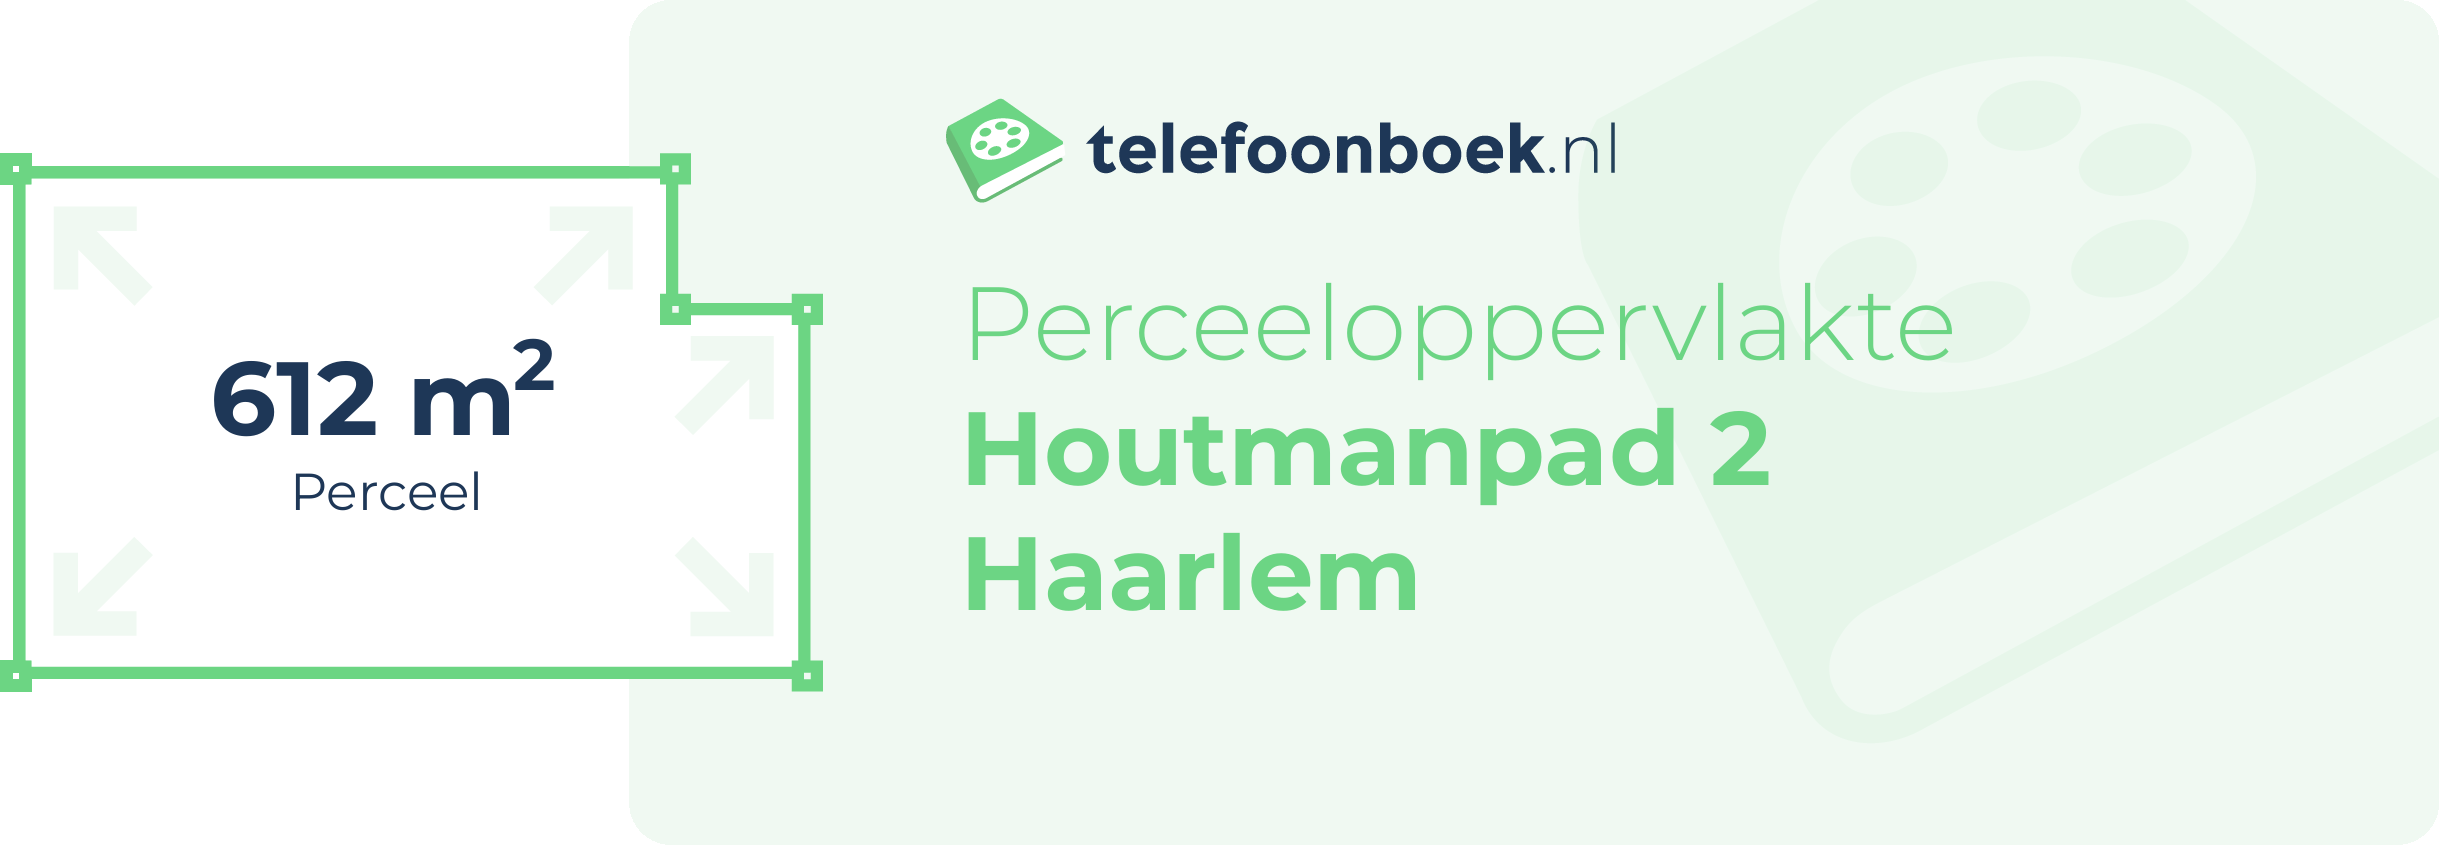 Perceeloppervlakte Houtmanpad 2 Haarlem